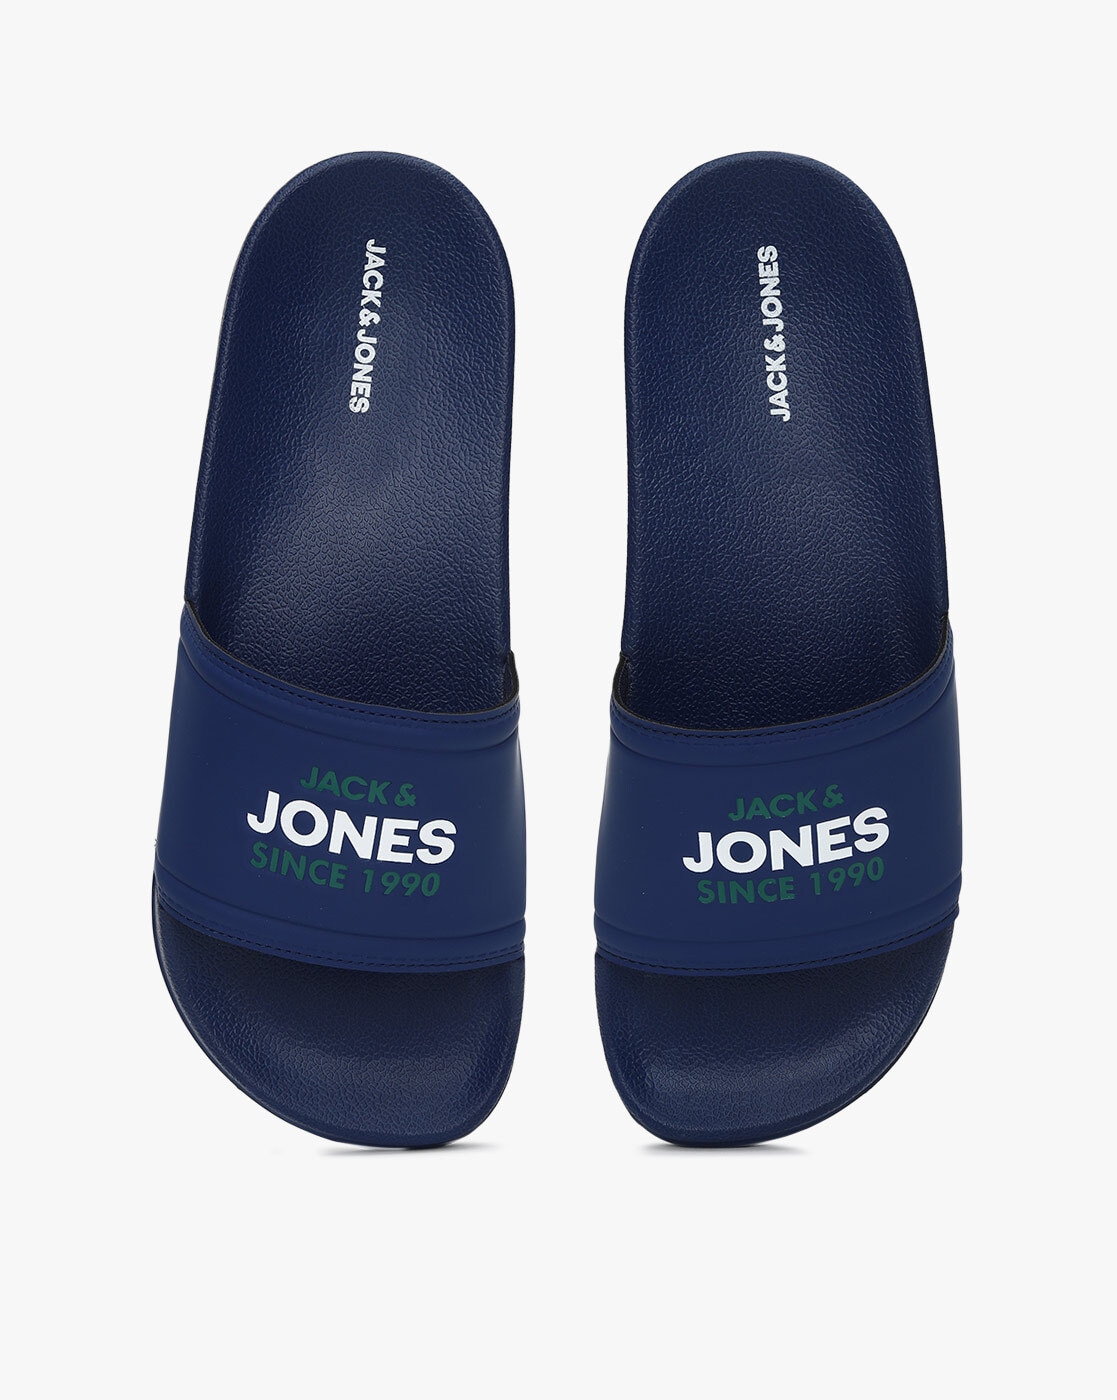 Jack & Jones slippers in black | ASOS-happymobile.vn